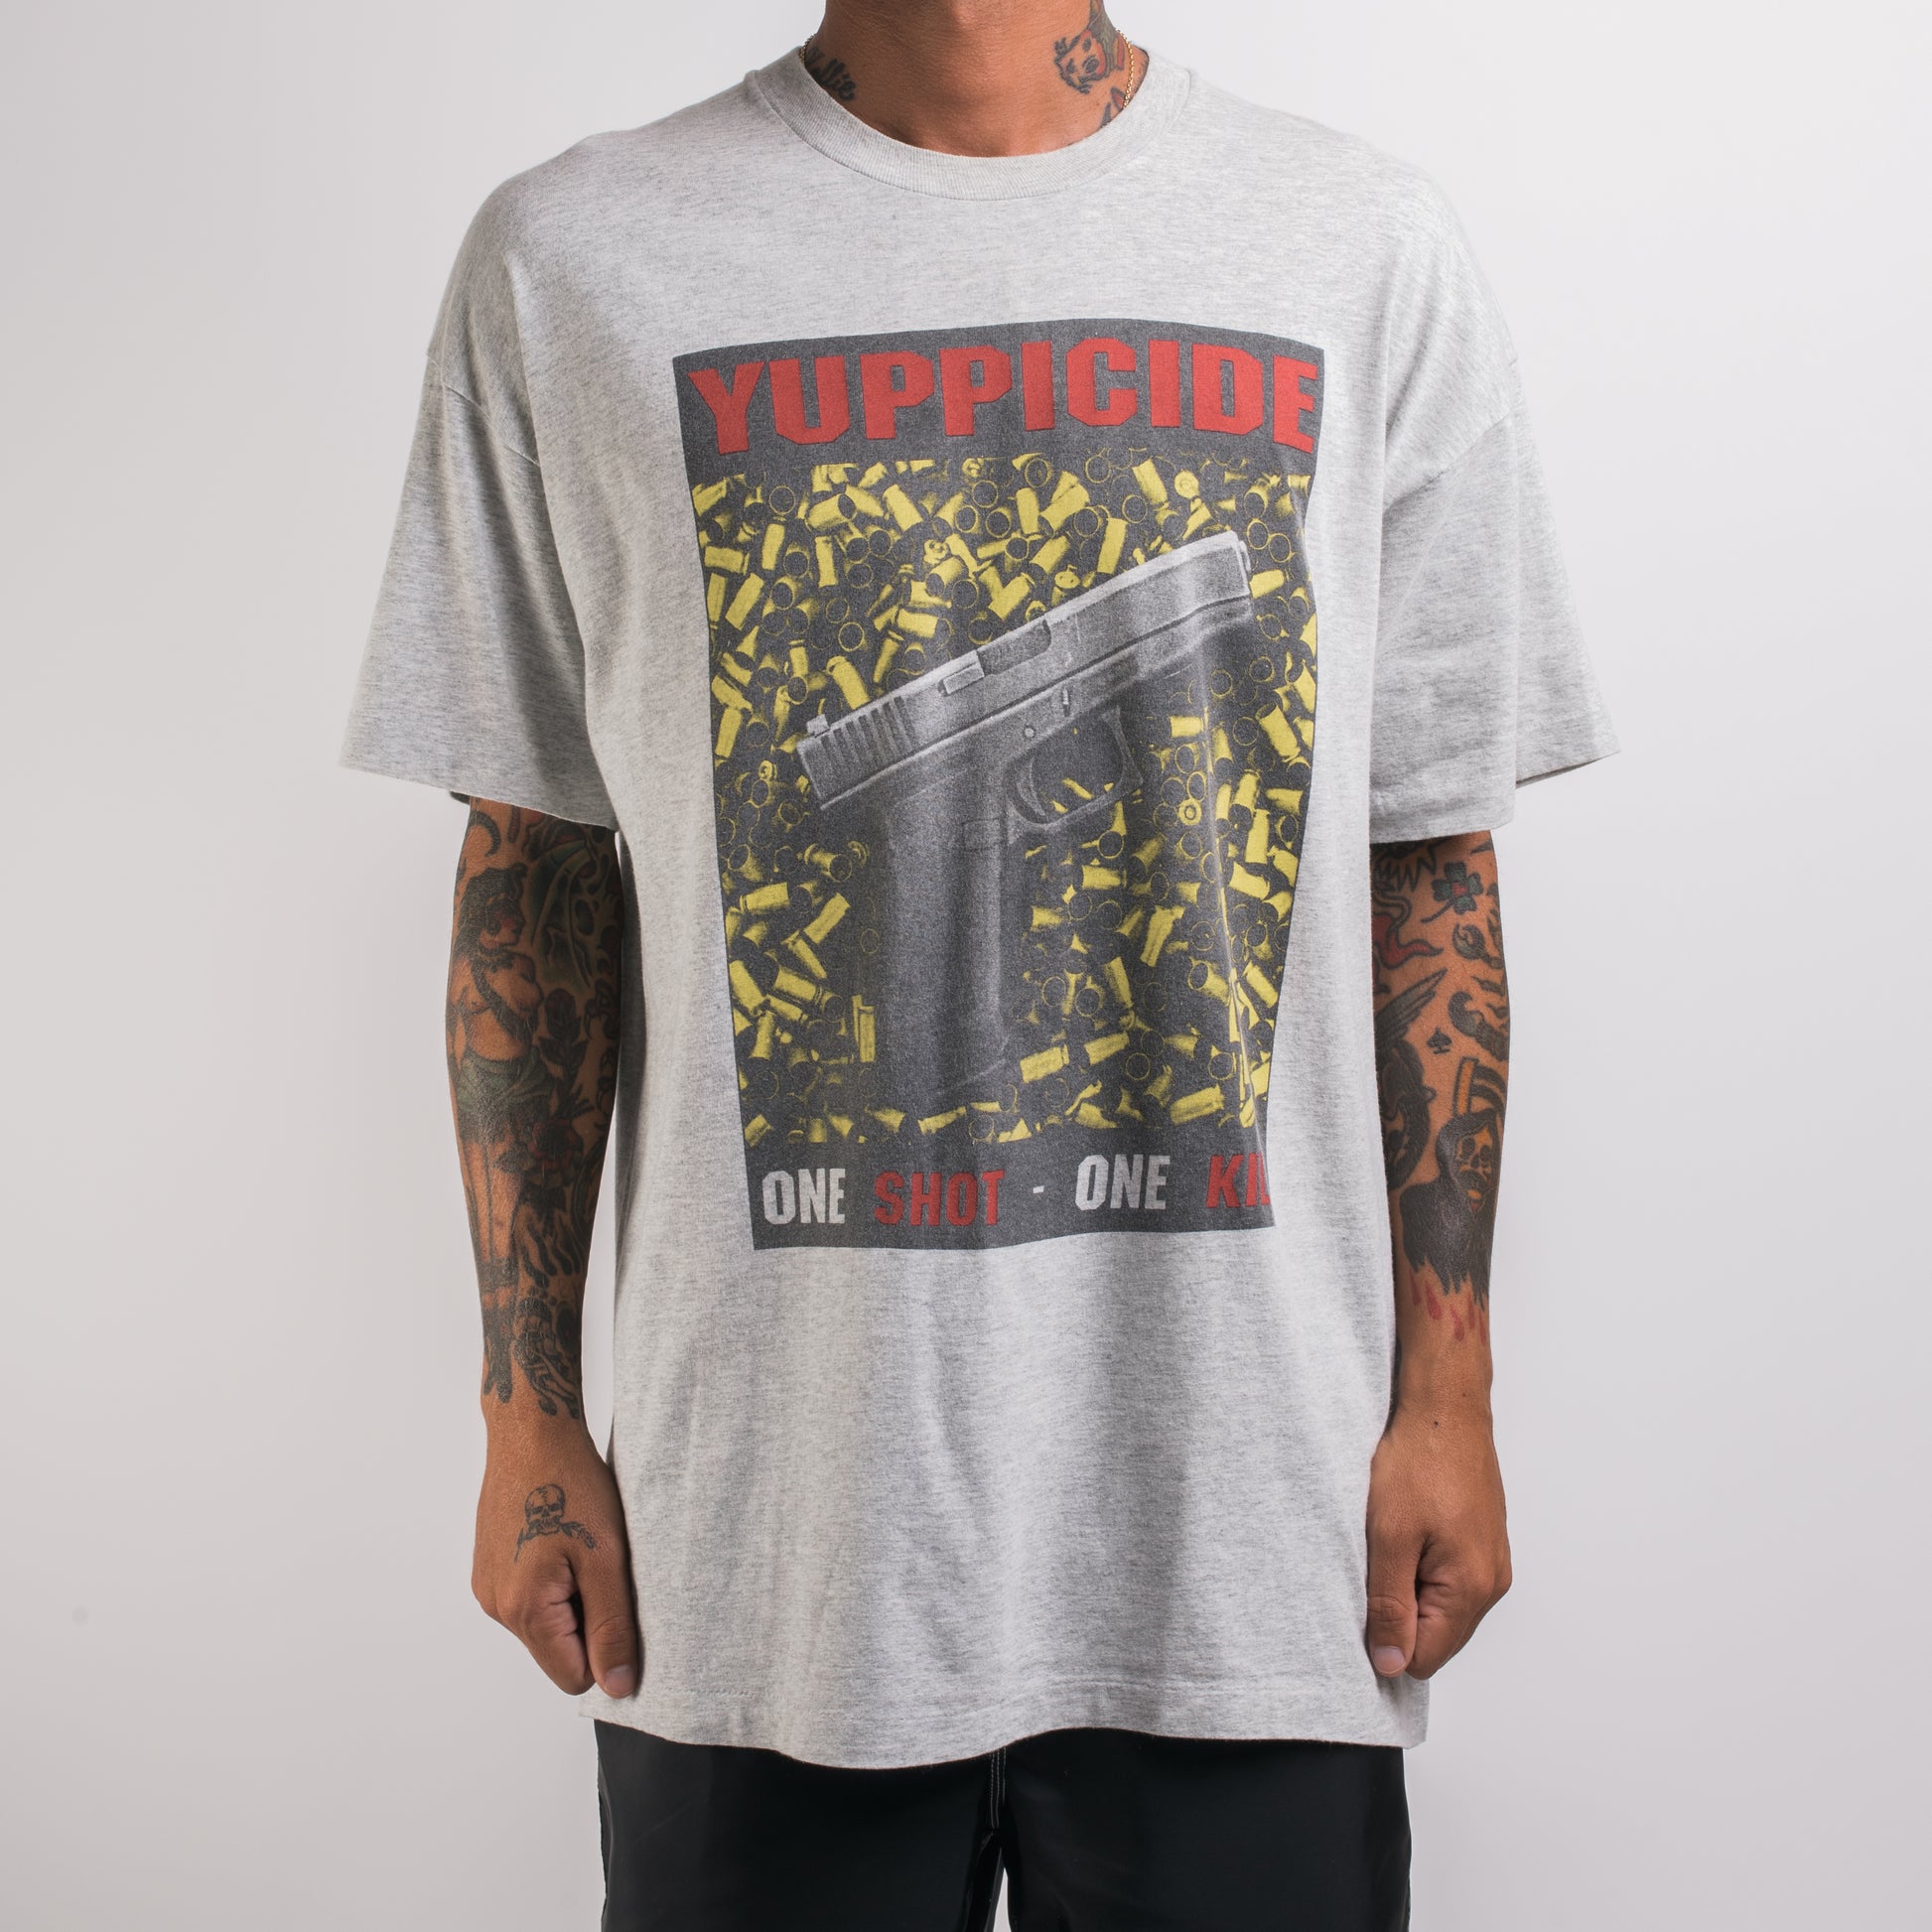 Vintage 90’s Yuppicide One Shot - One Kill T-Shirt – Mills Vintage USA